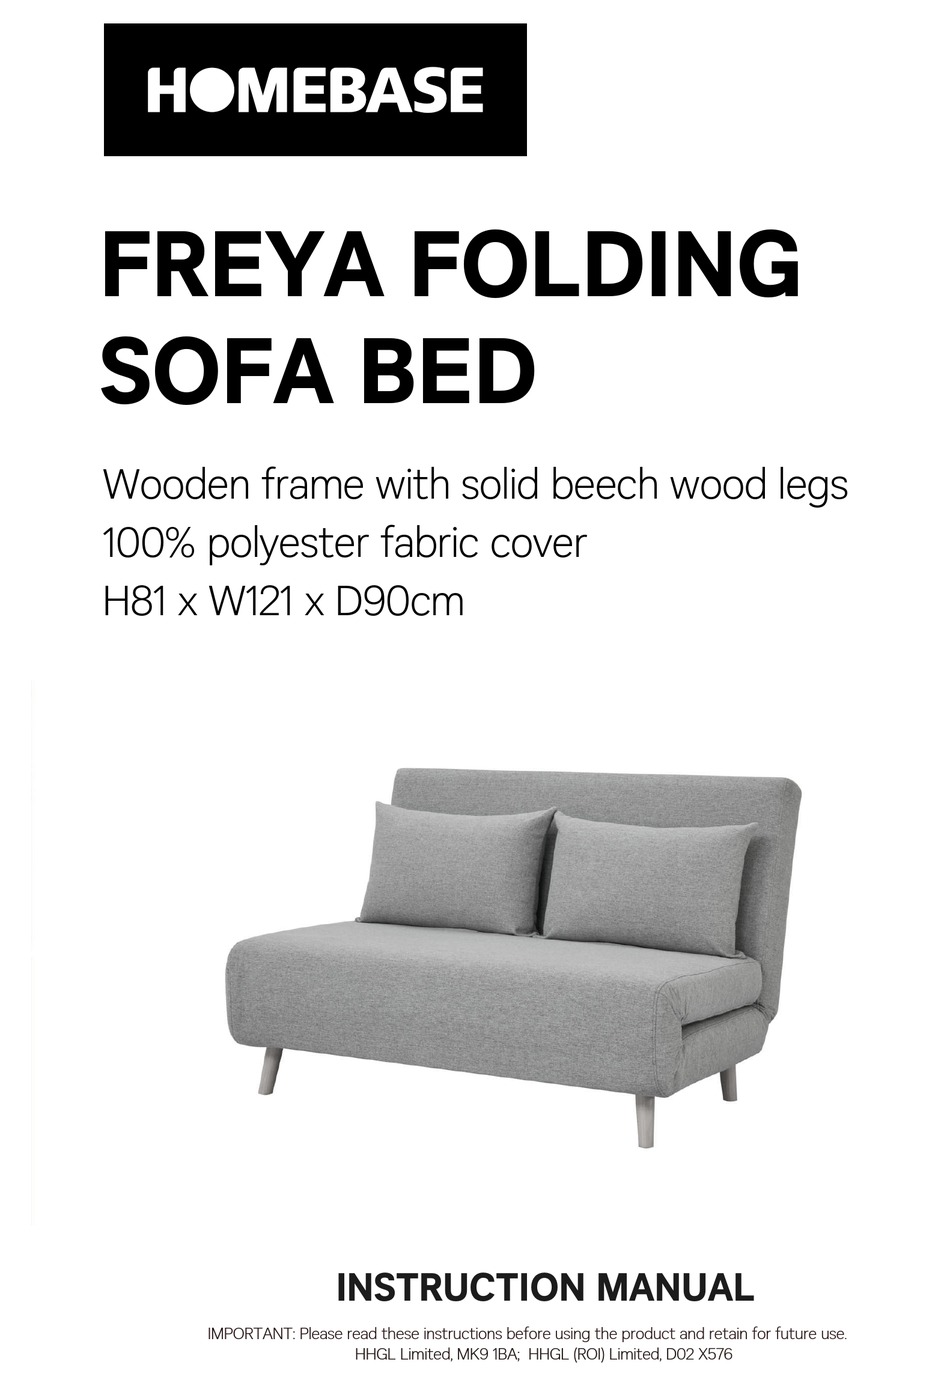 Homebase Freya Folding Sofa Bed 